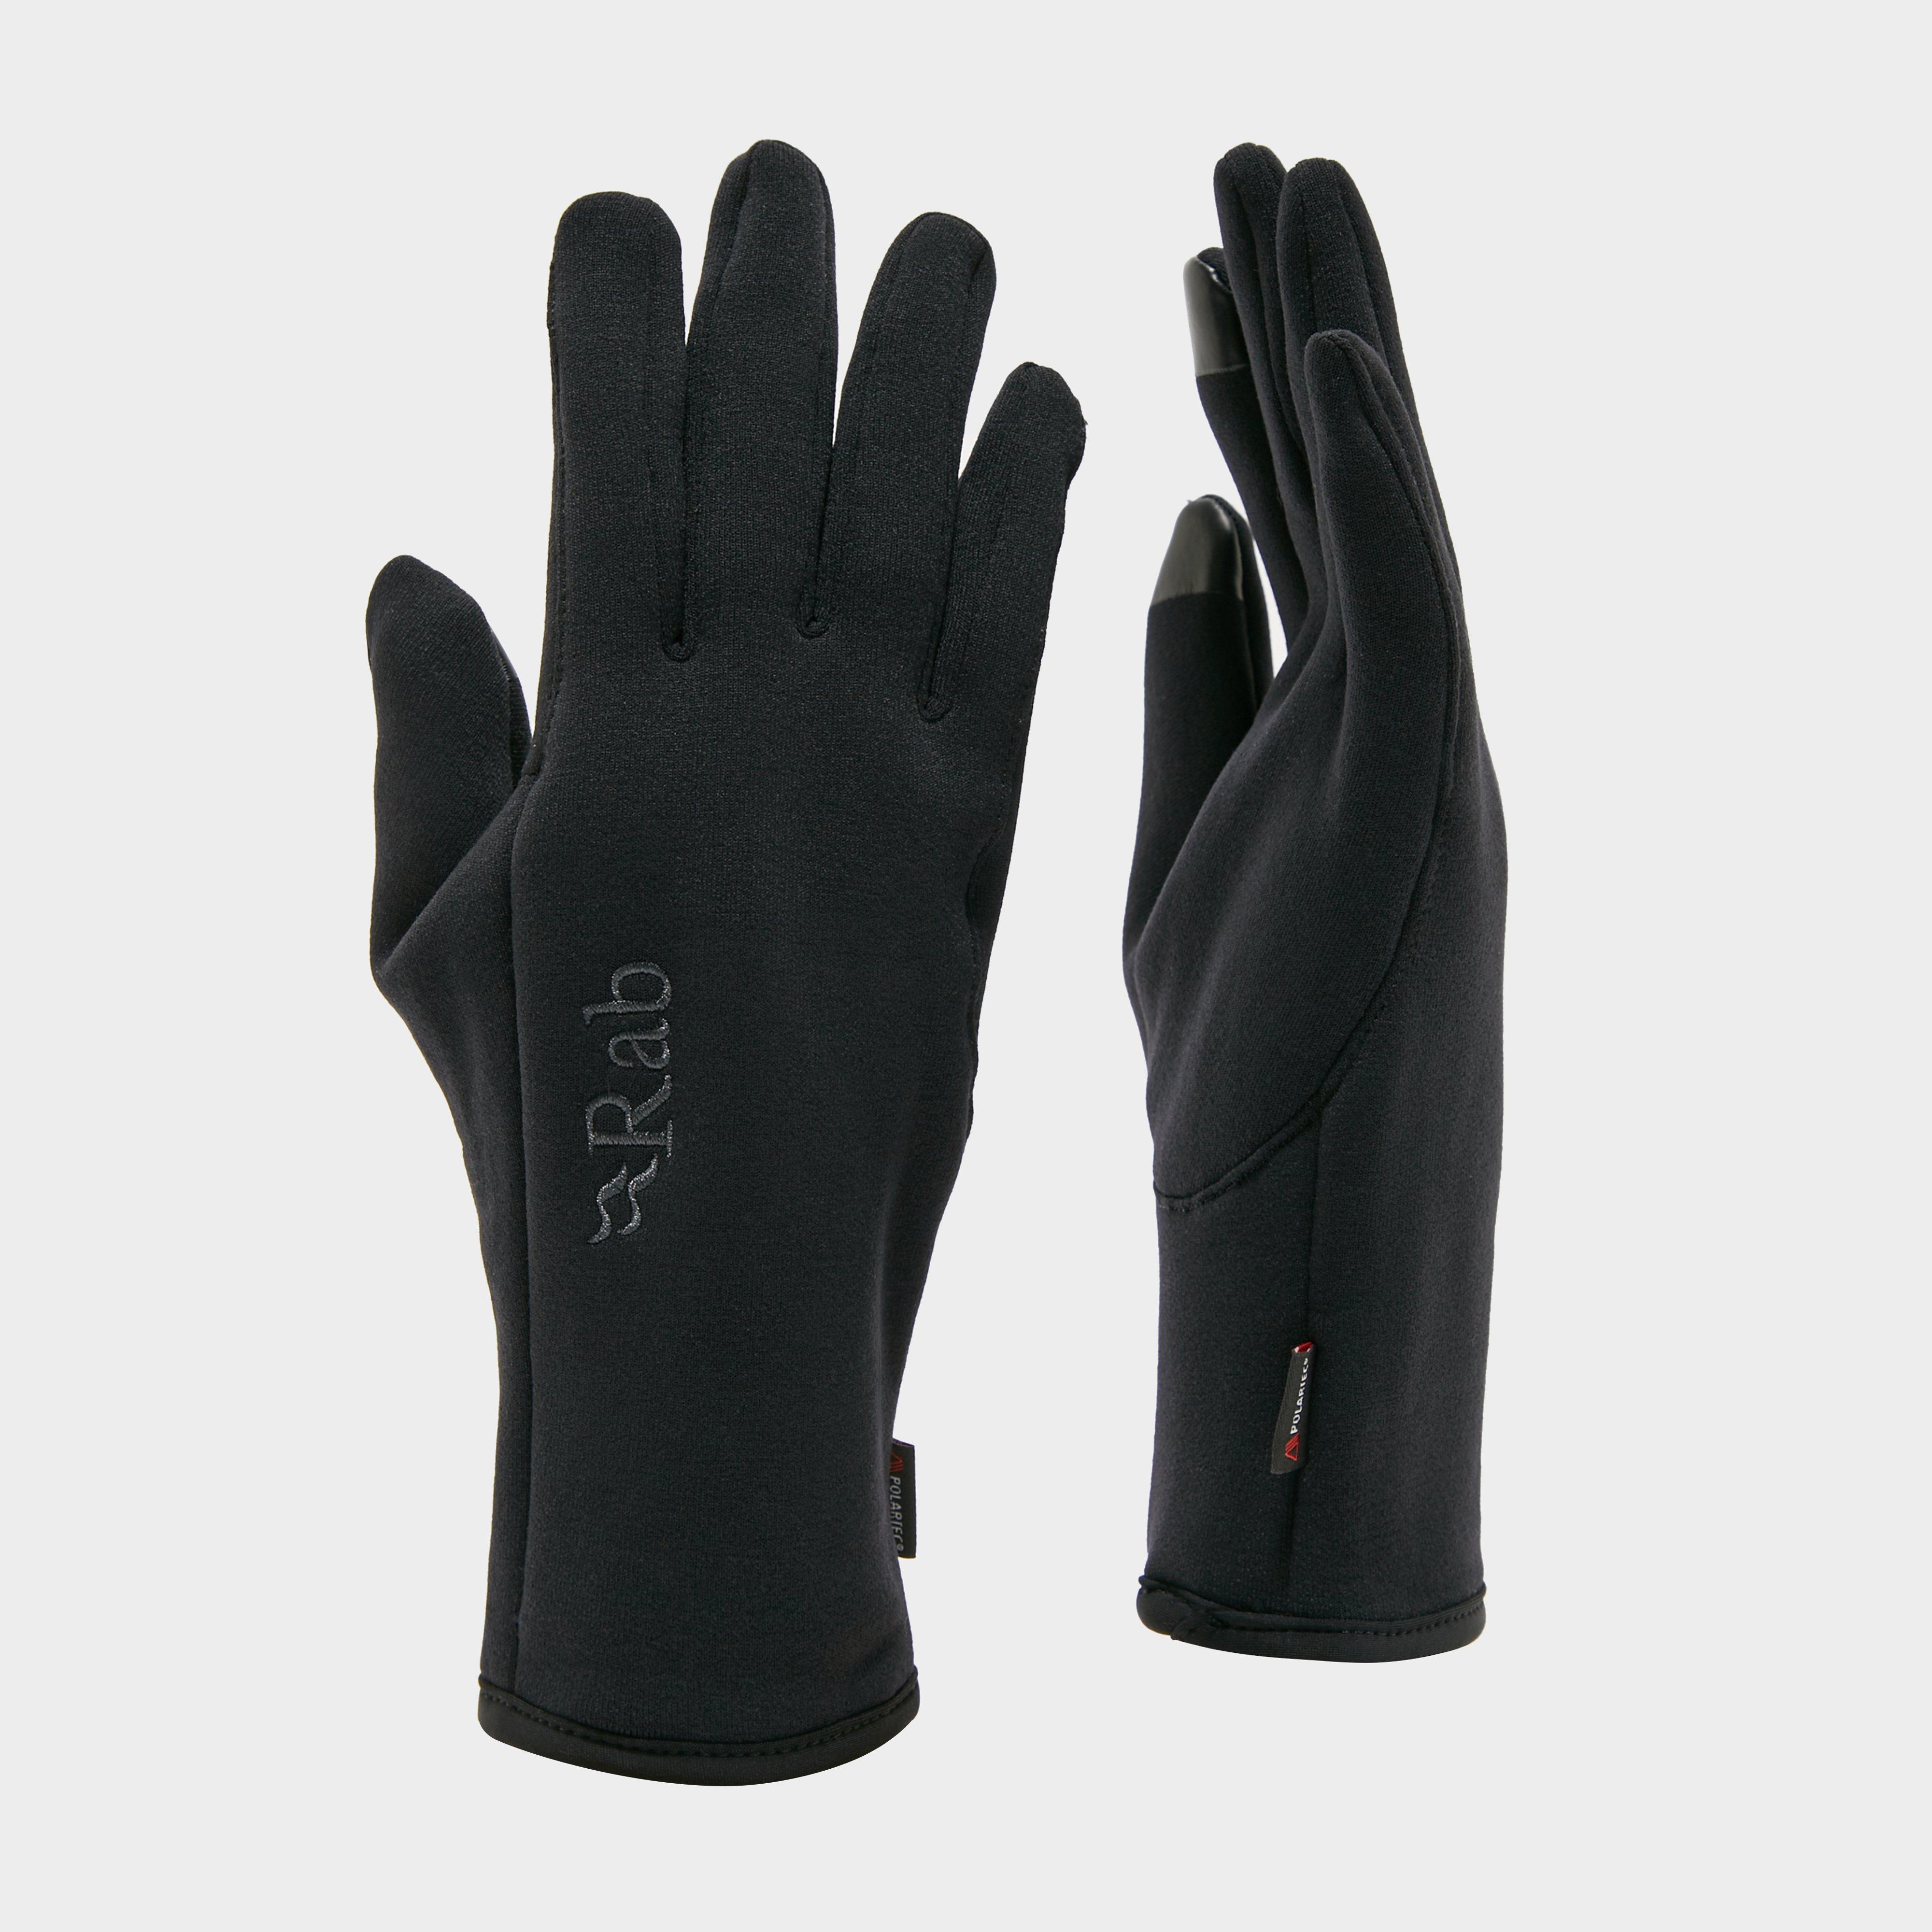 Rab Power Stretch Contact Glove - Black/blk  Black/blk